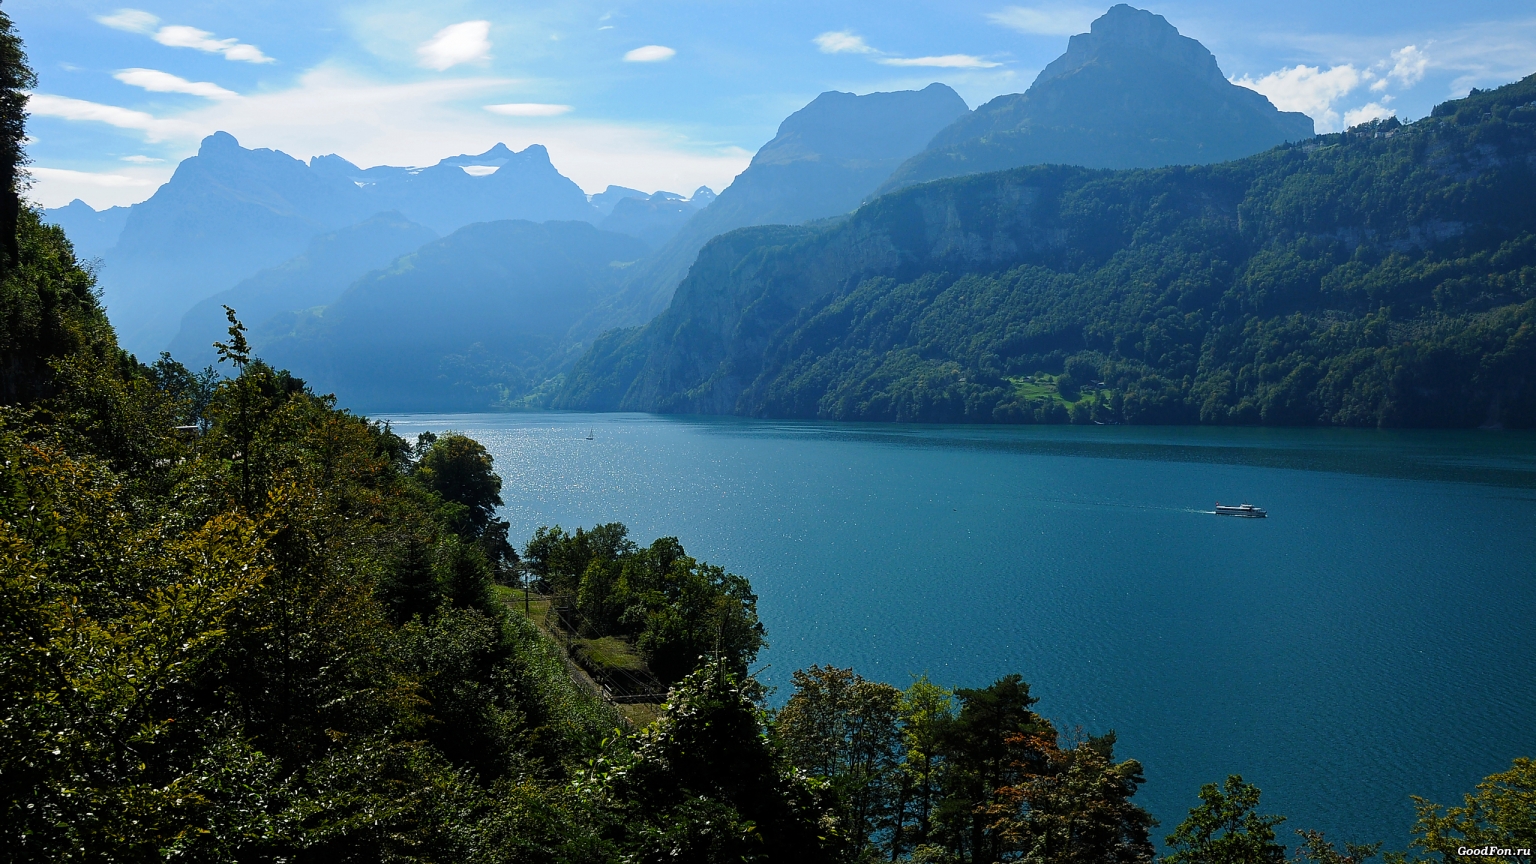 Beautiful Mountain Lake for 1536 x 864 HDTV resolution